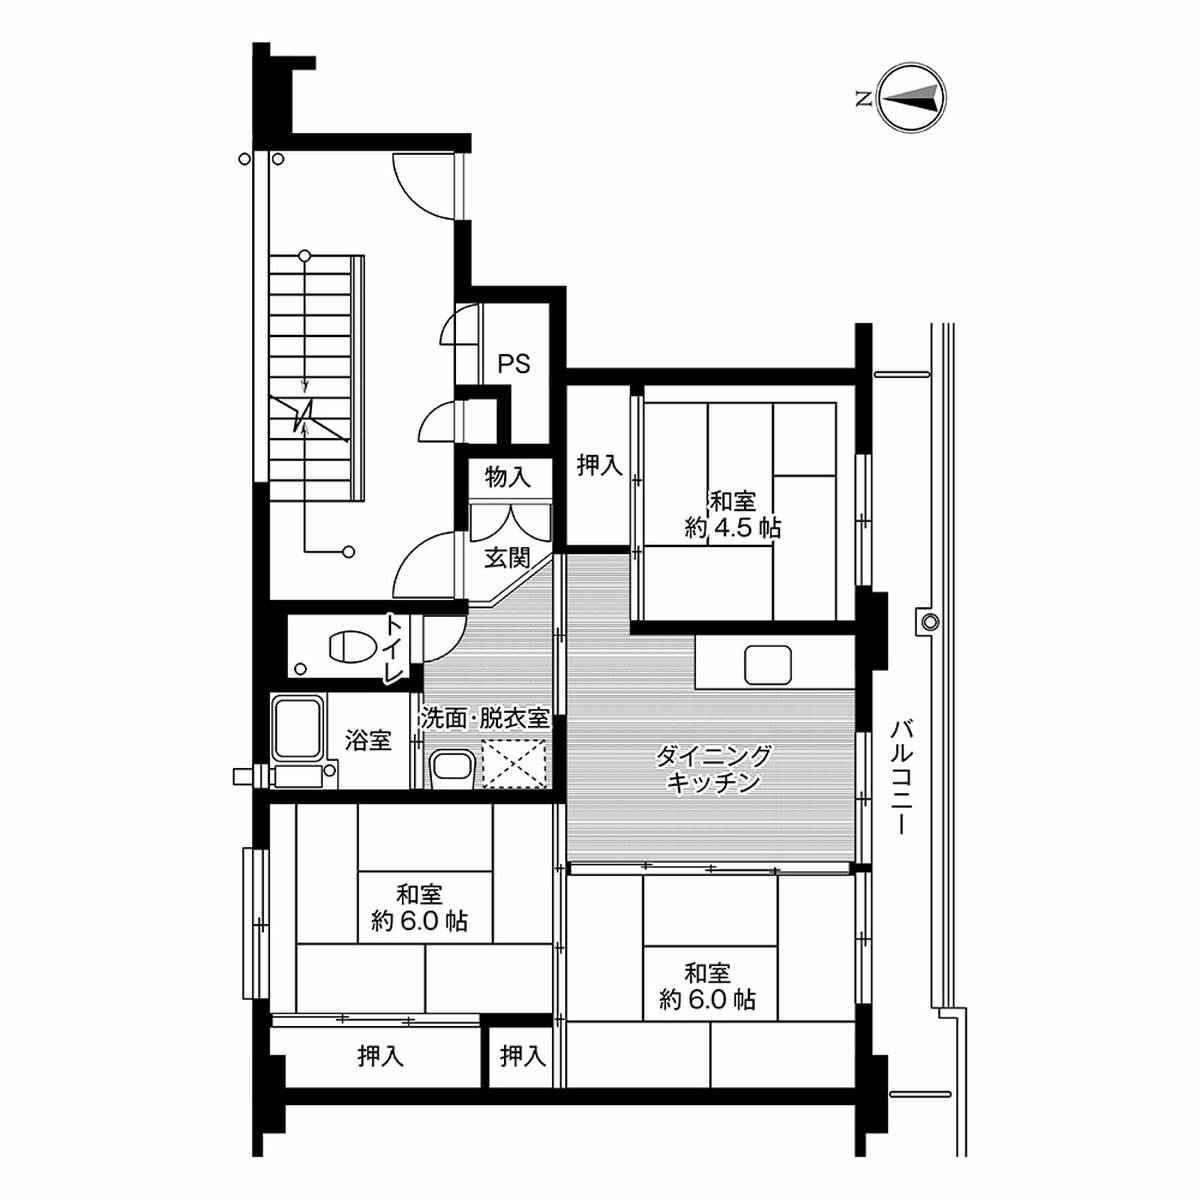 3DK floorplan of Village House Yanagida Dai 2 in Himi-shi